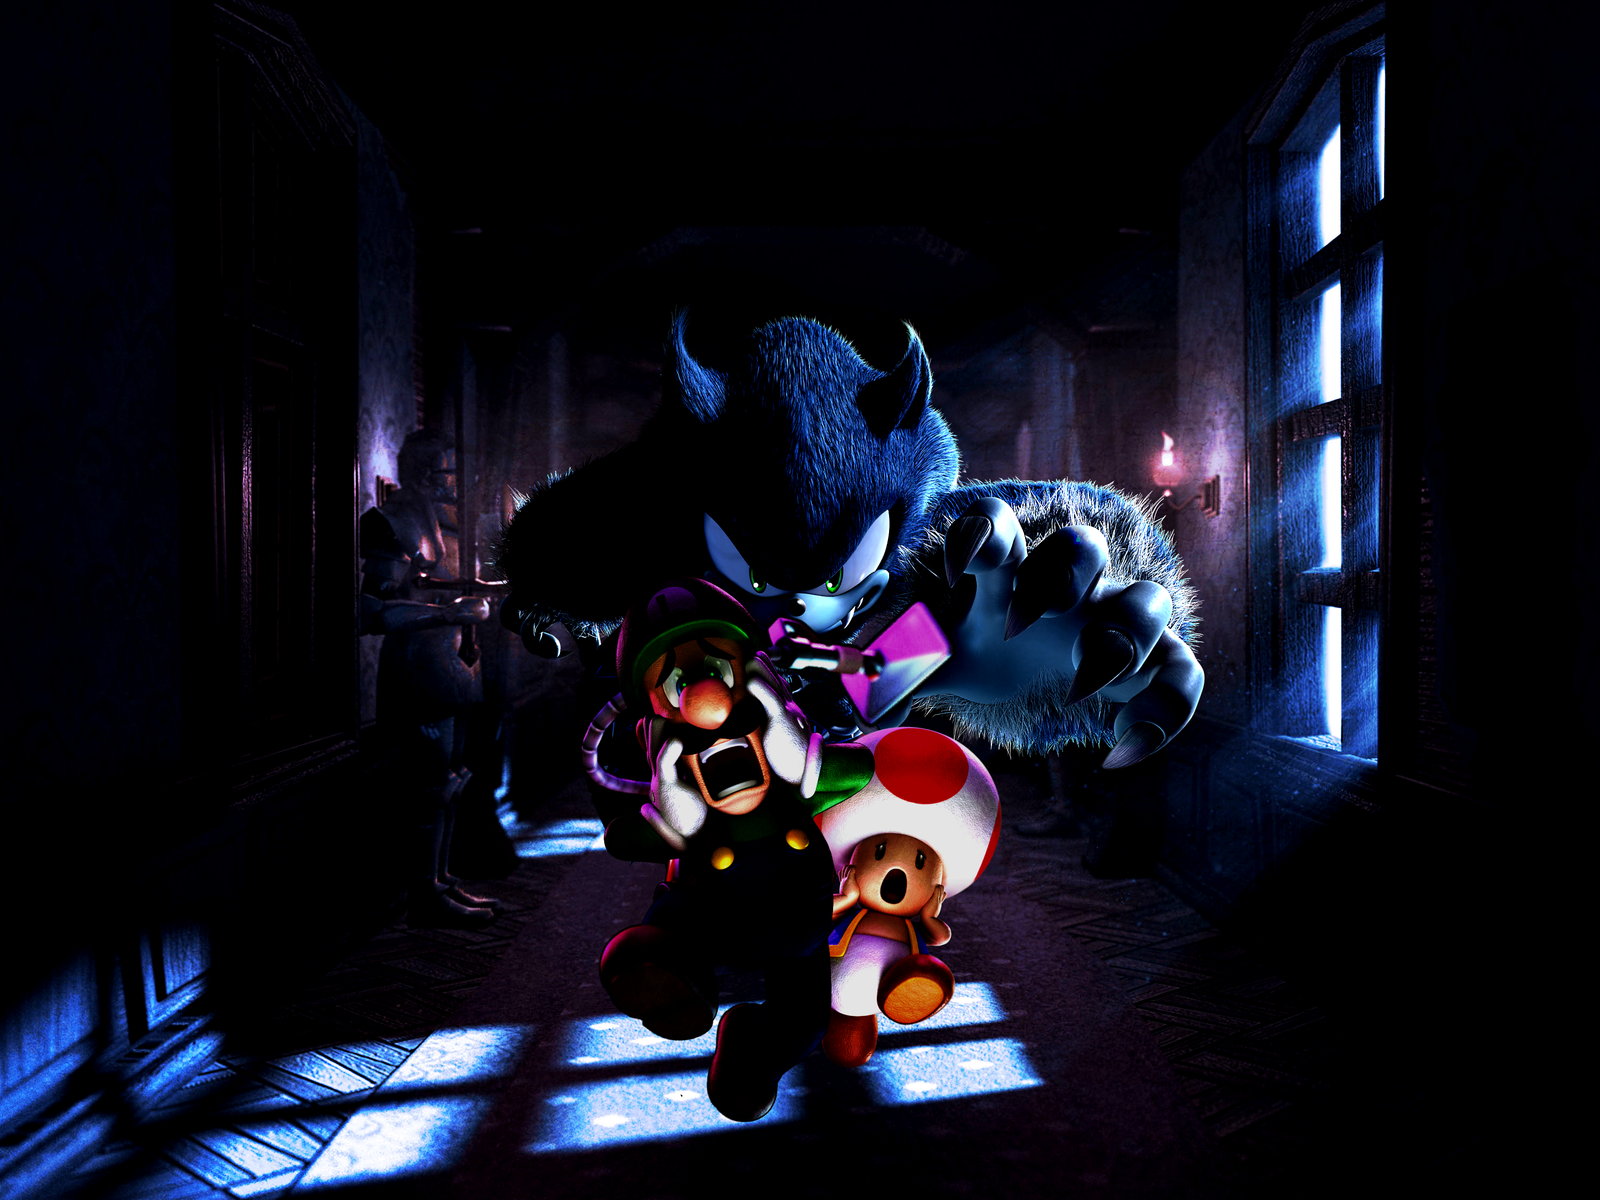 Luigi S Mansion A Werehog In The Gloomy Manor By Legend Tony980 On